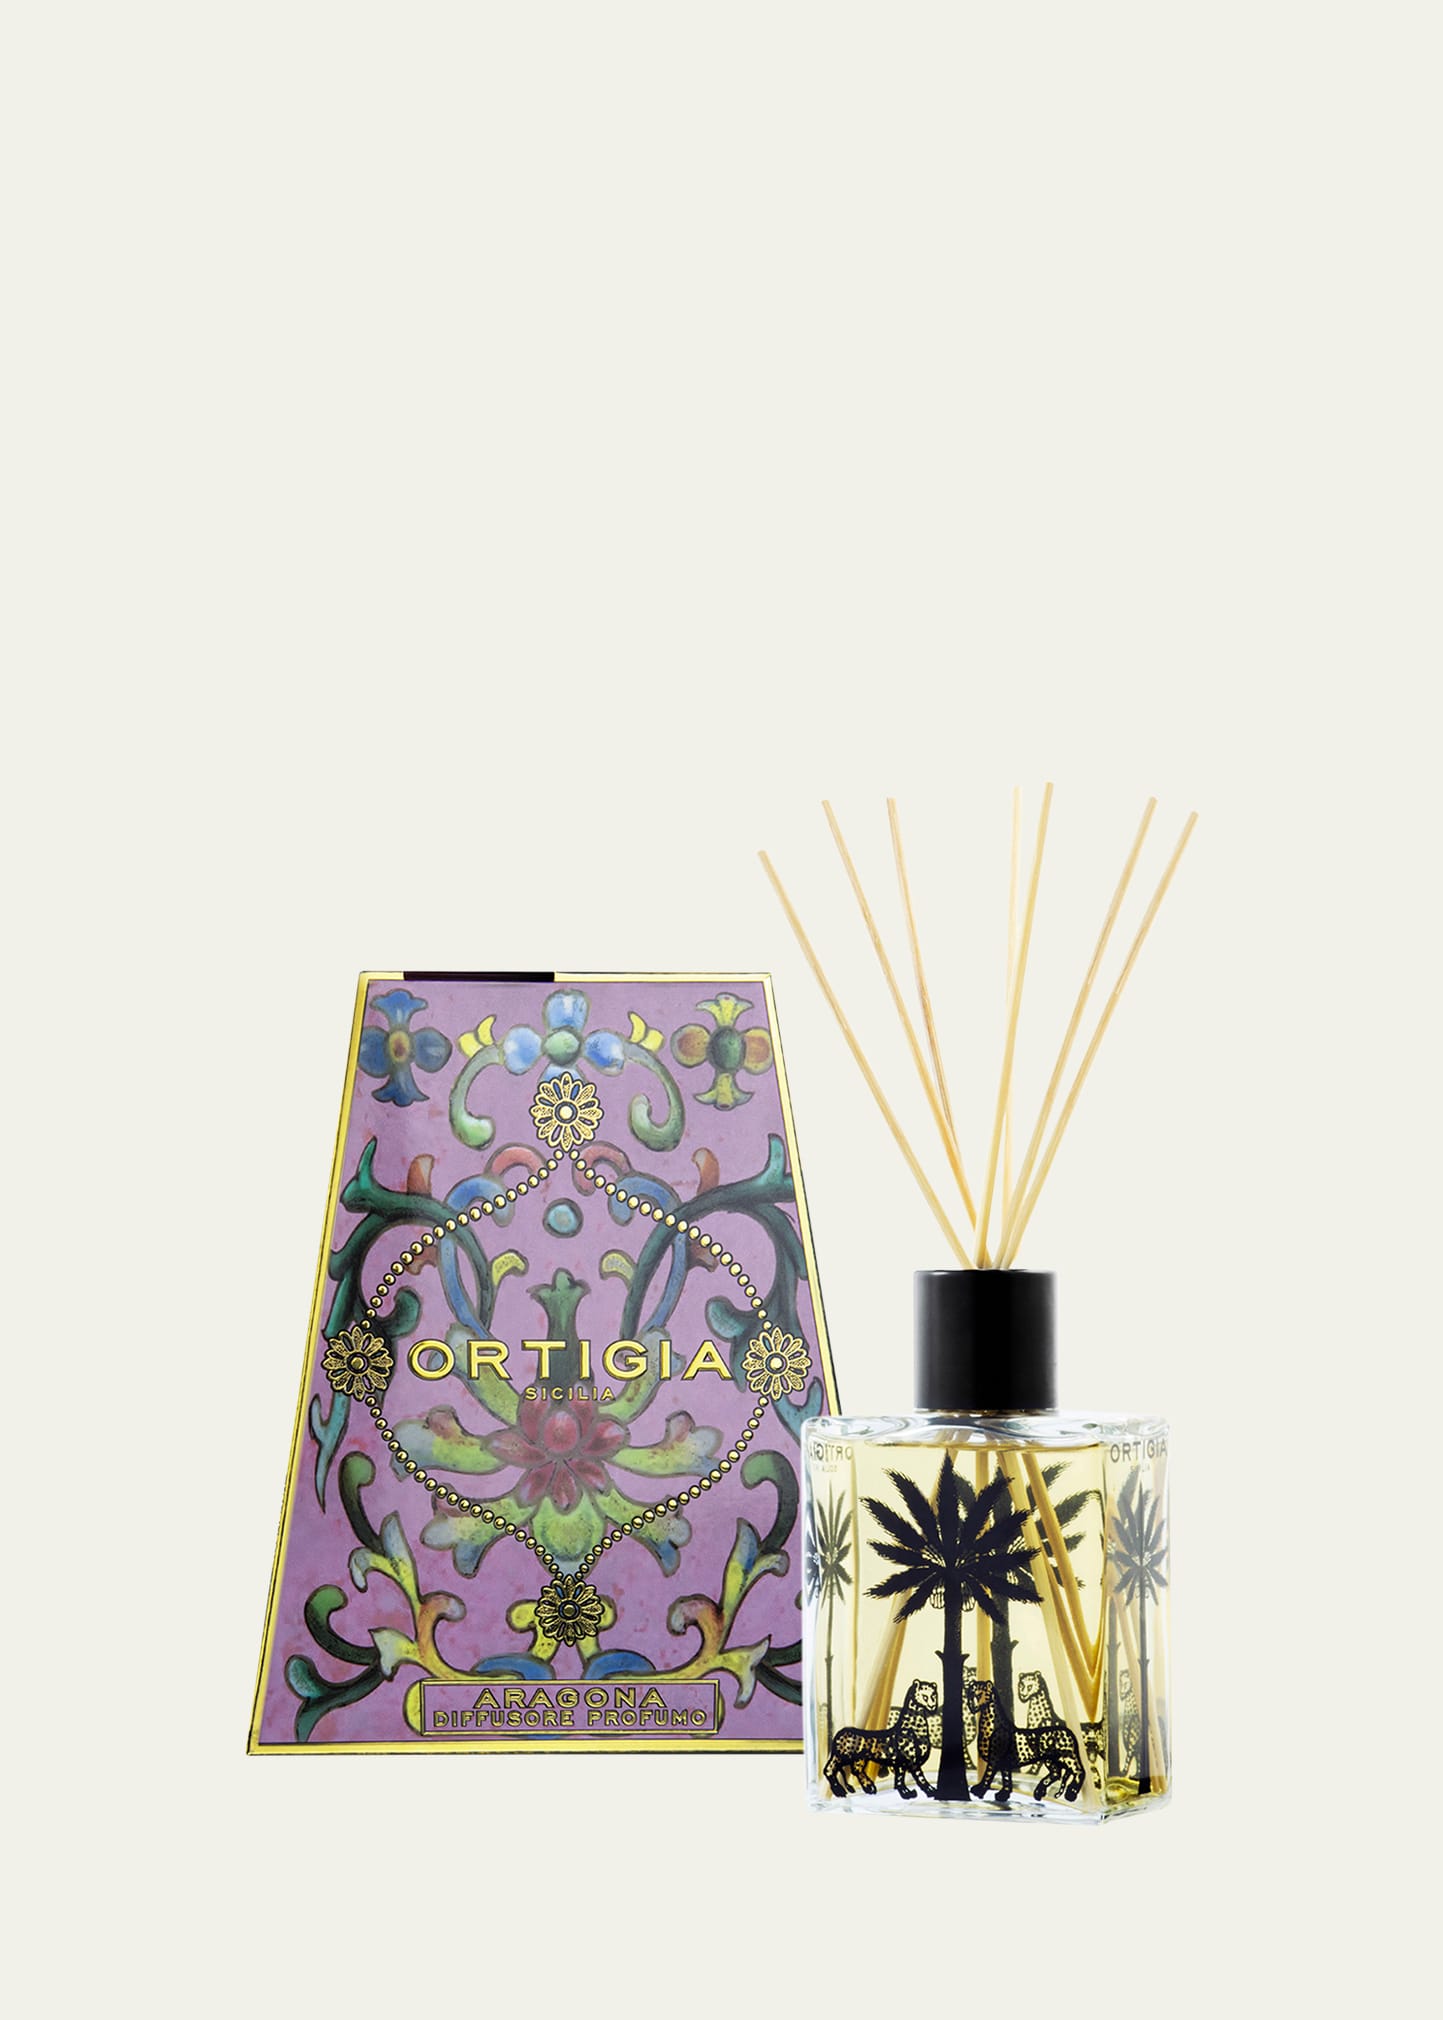 Aragona Perfume Diffuser, 6.8 oz.